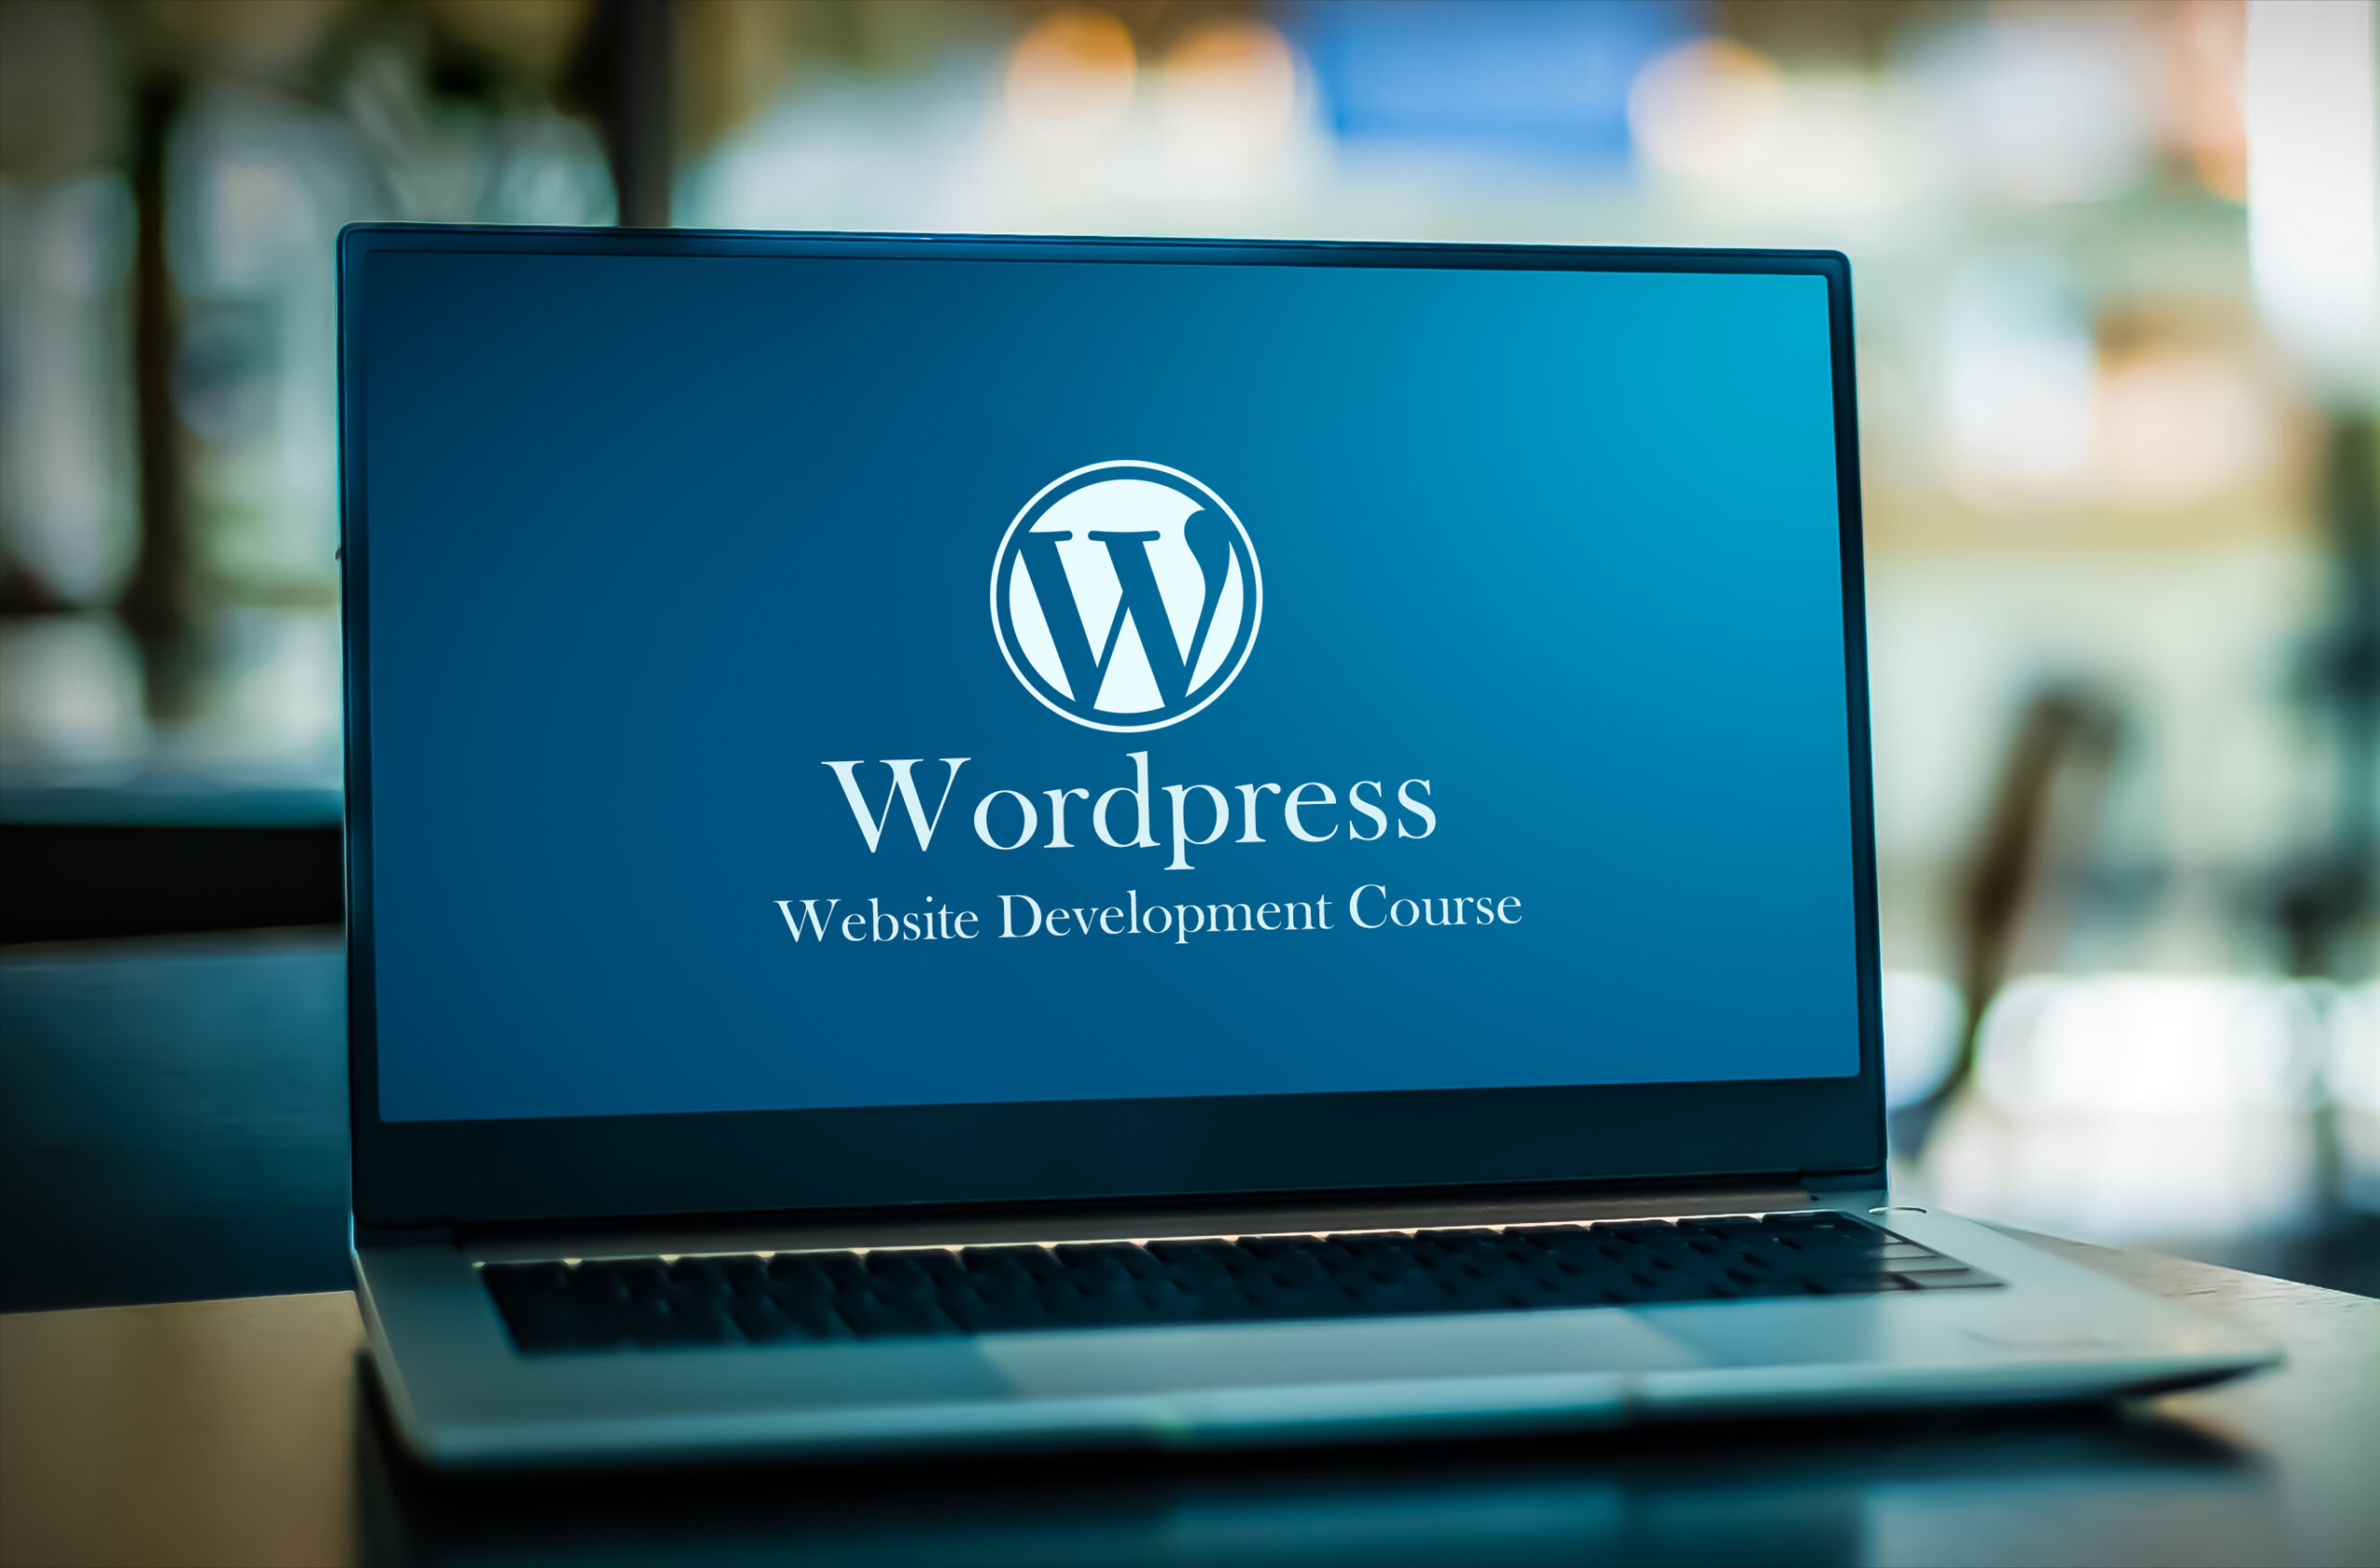 Wordpress website Development Course